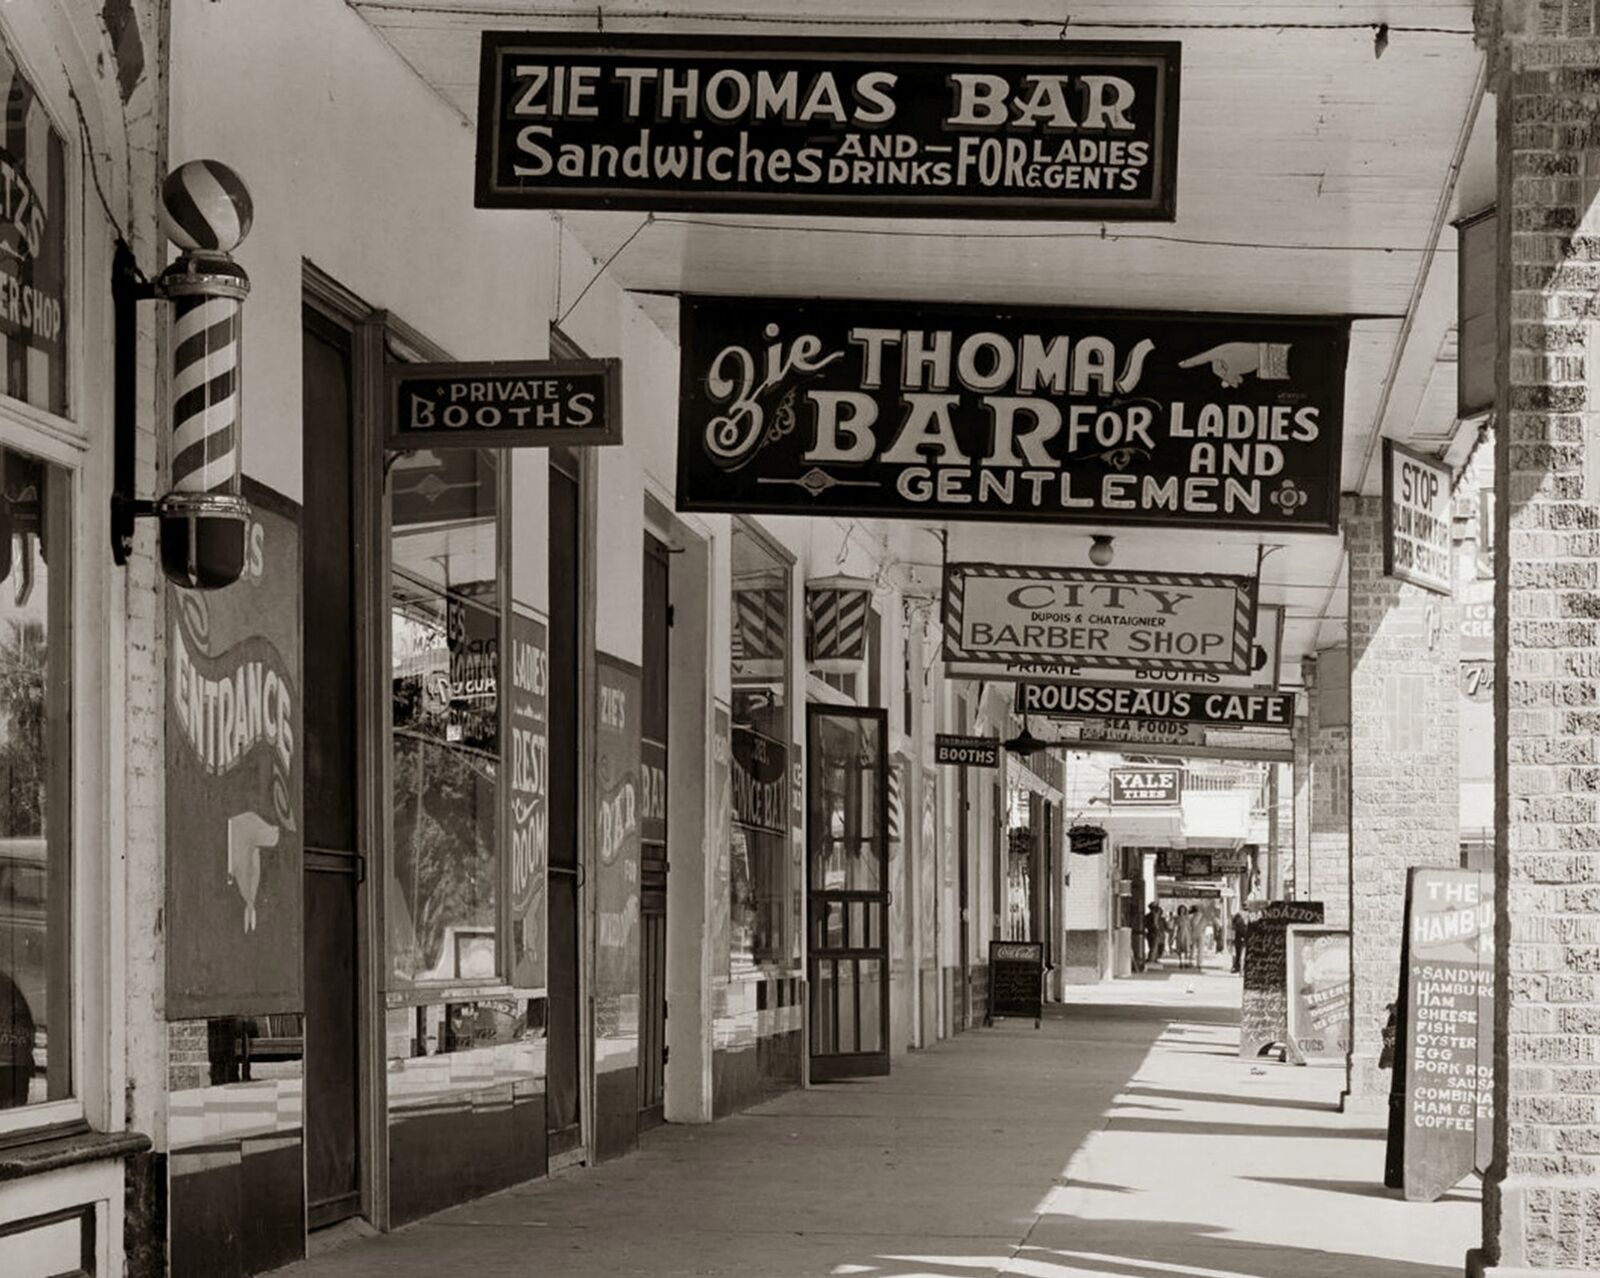   1938 Stores on Main St Saint Martinville La, Photo  (230-X)